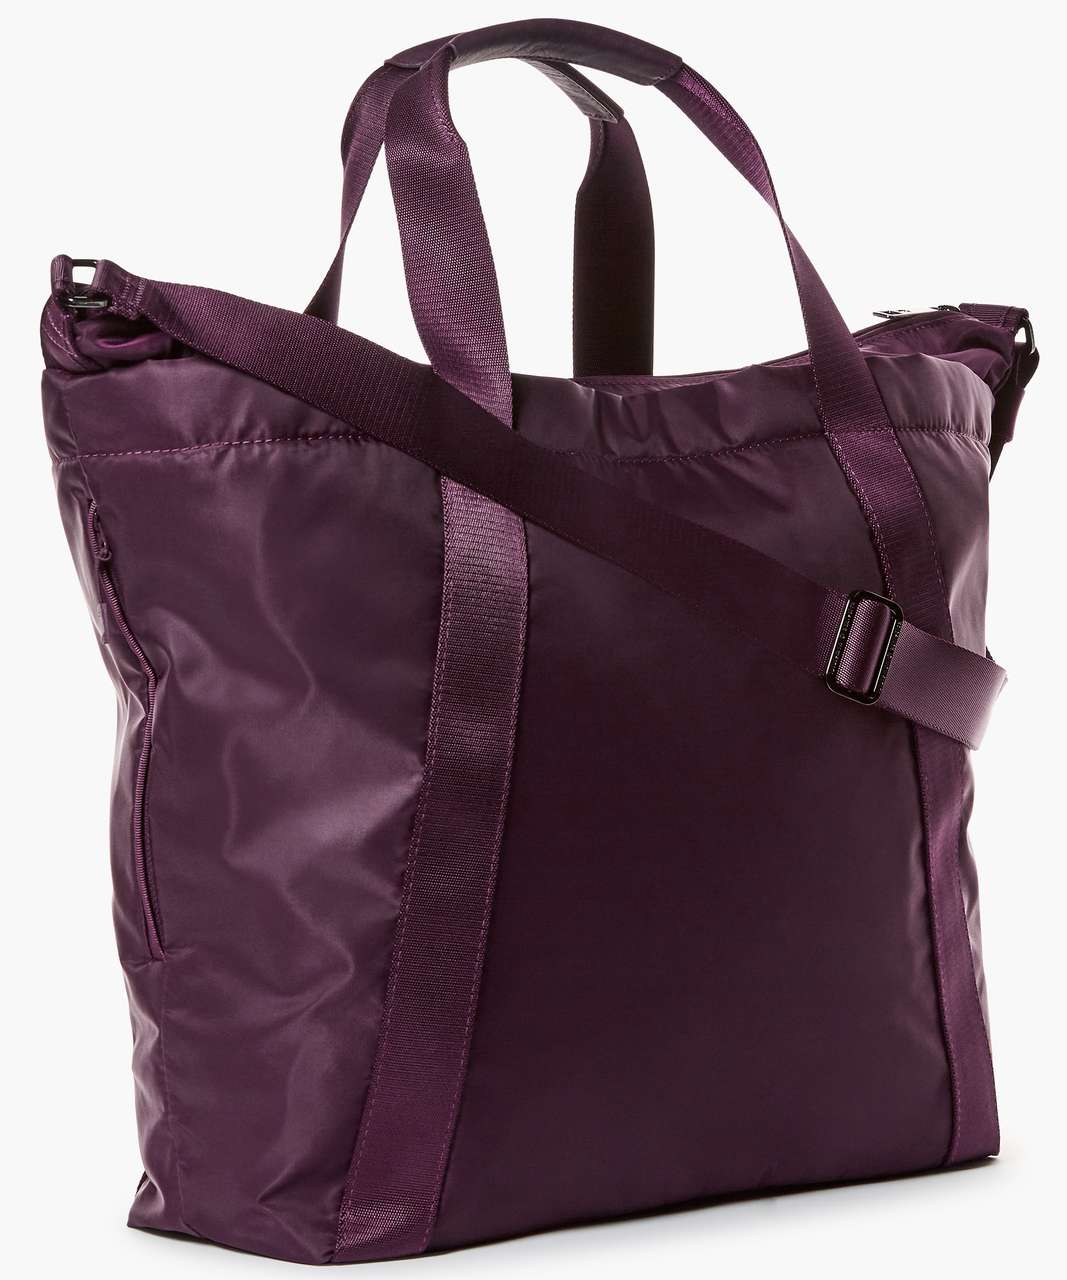 Lululemon Carry The Day Bag (Heatproof Pocket 22L) - Dark Adobe